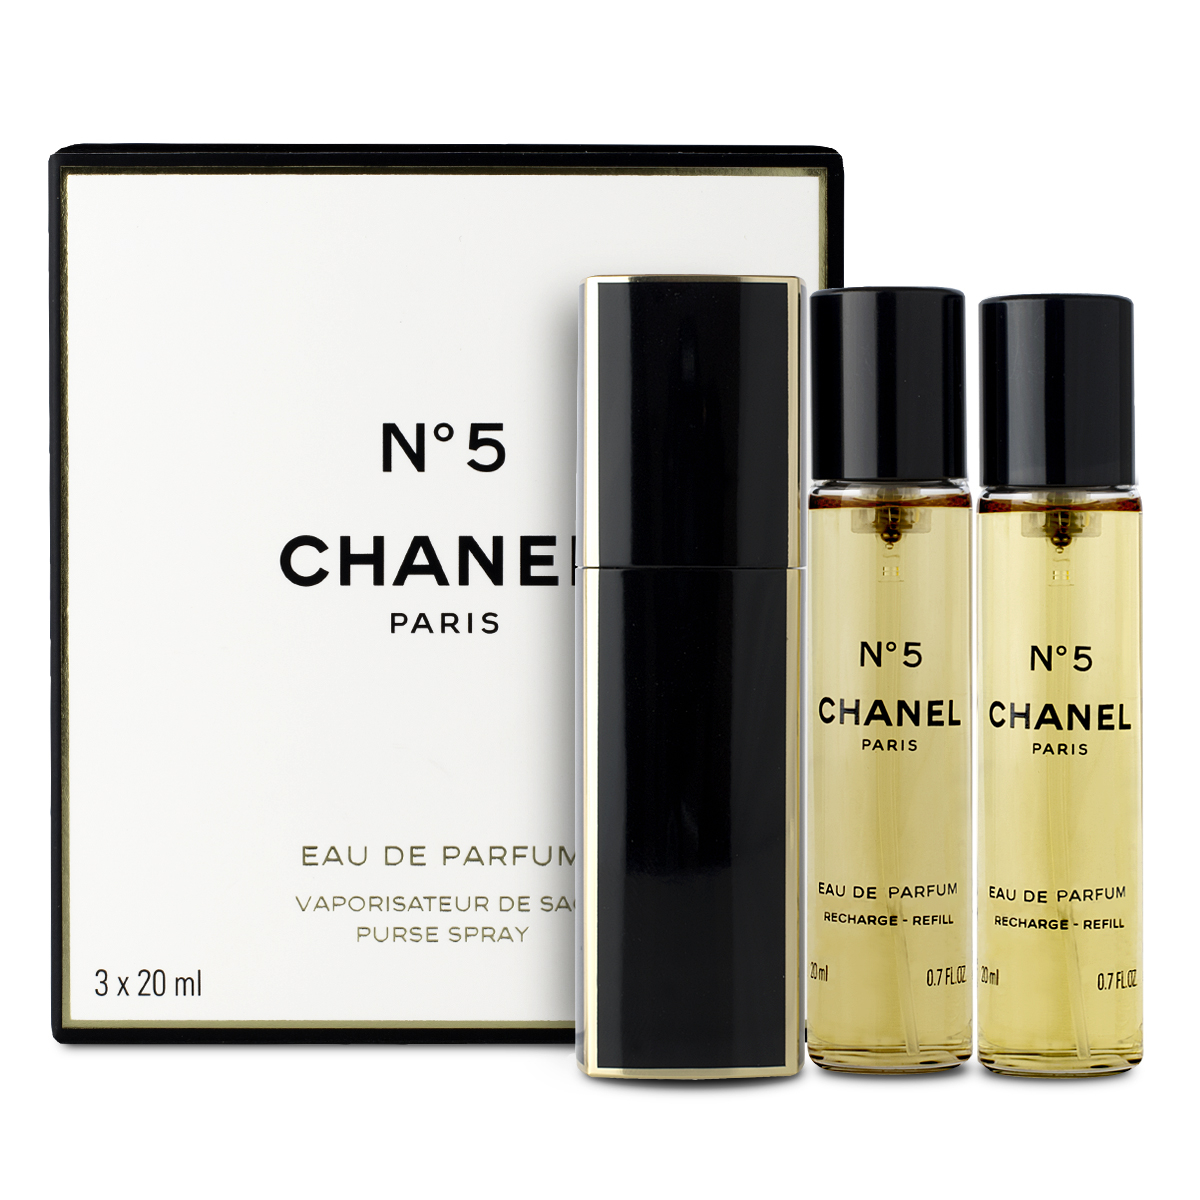 Chanel No. 5 Eau de Parfum Twist & Spray 20ml + 2 X 20ml Refills